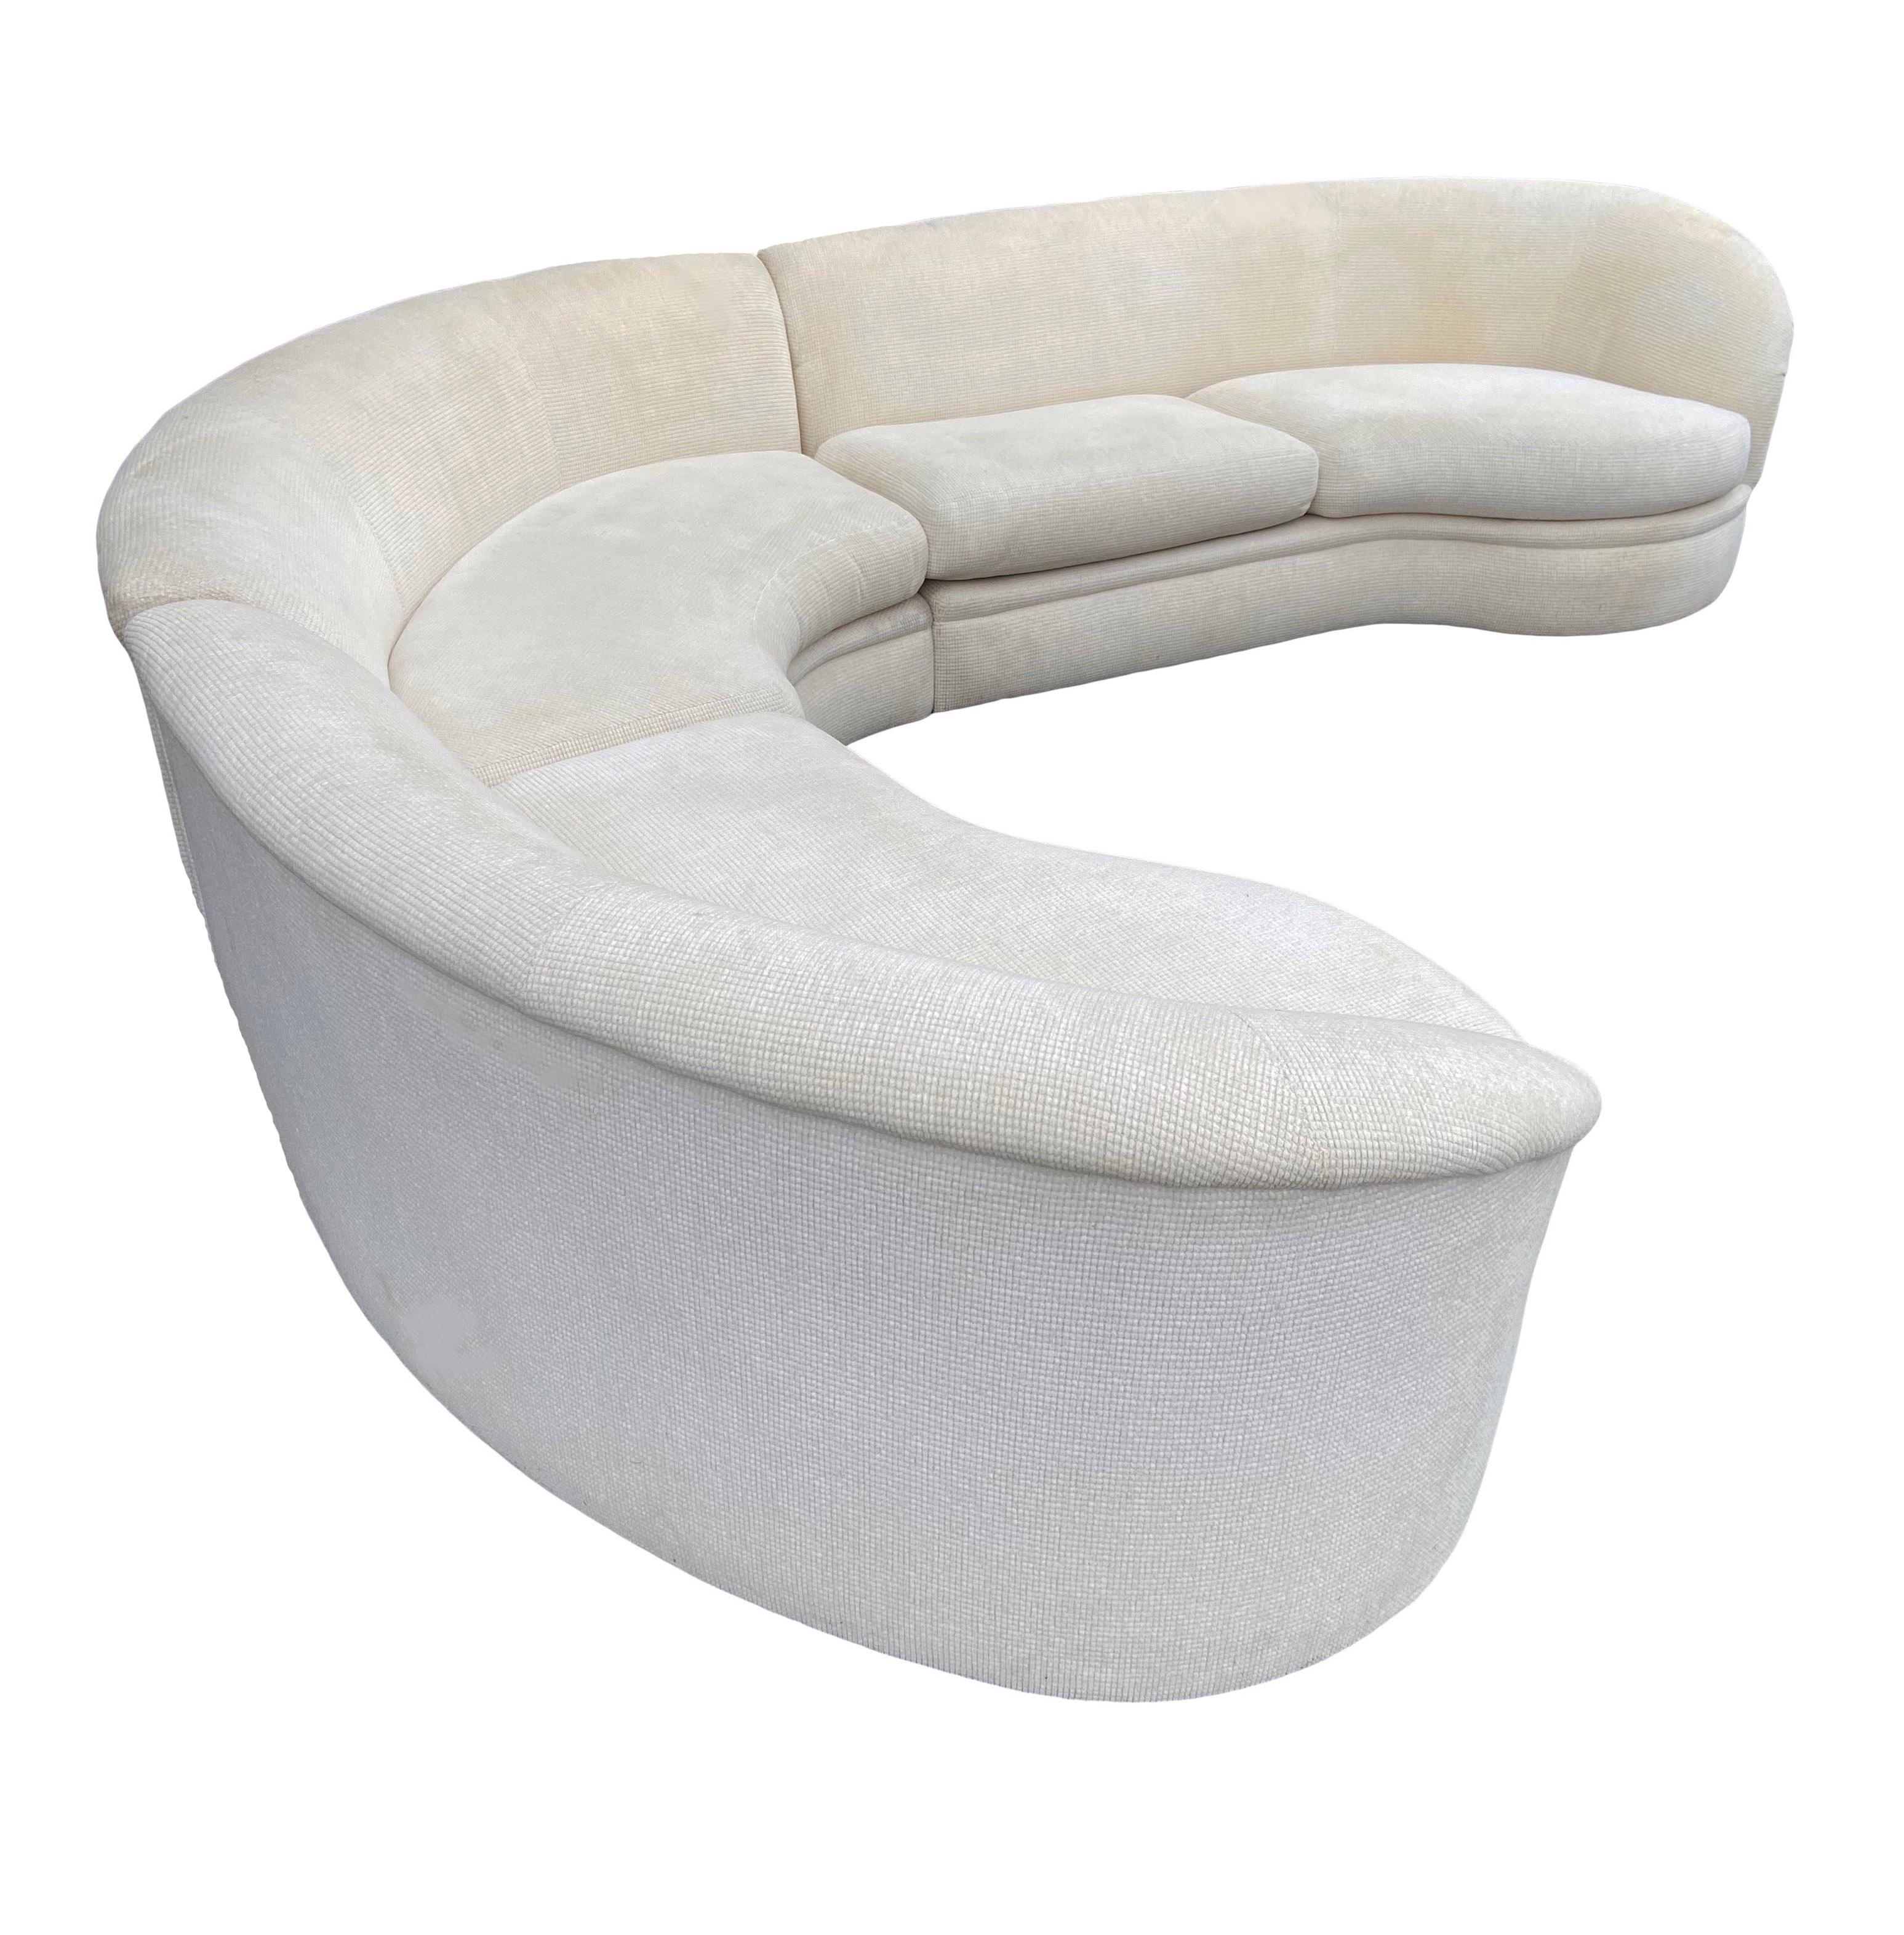 curved mid century modern sofa